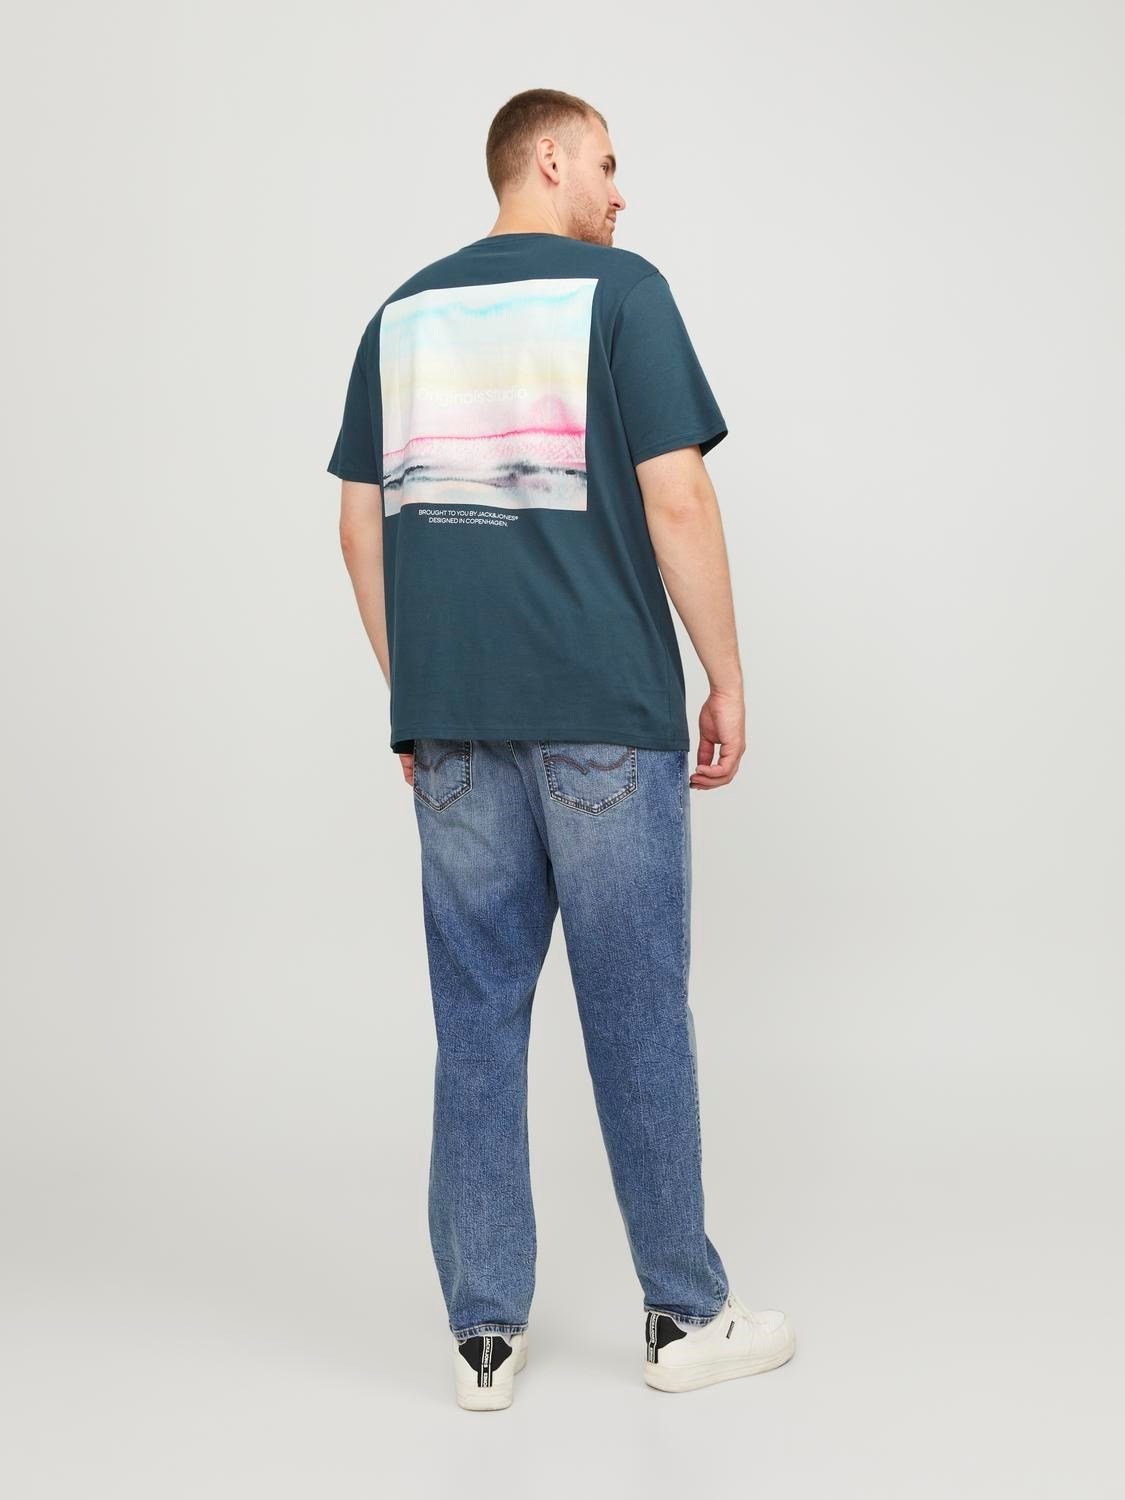 Jack & Basic 6606 Plus T-Shirt Rundhals in Size Grün T-Shirt JORVESTERBRO Jones